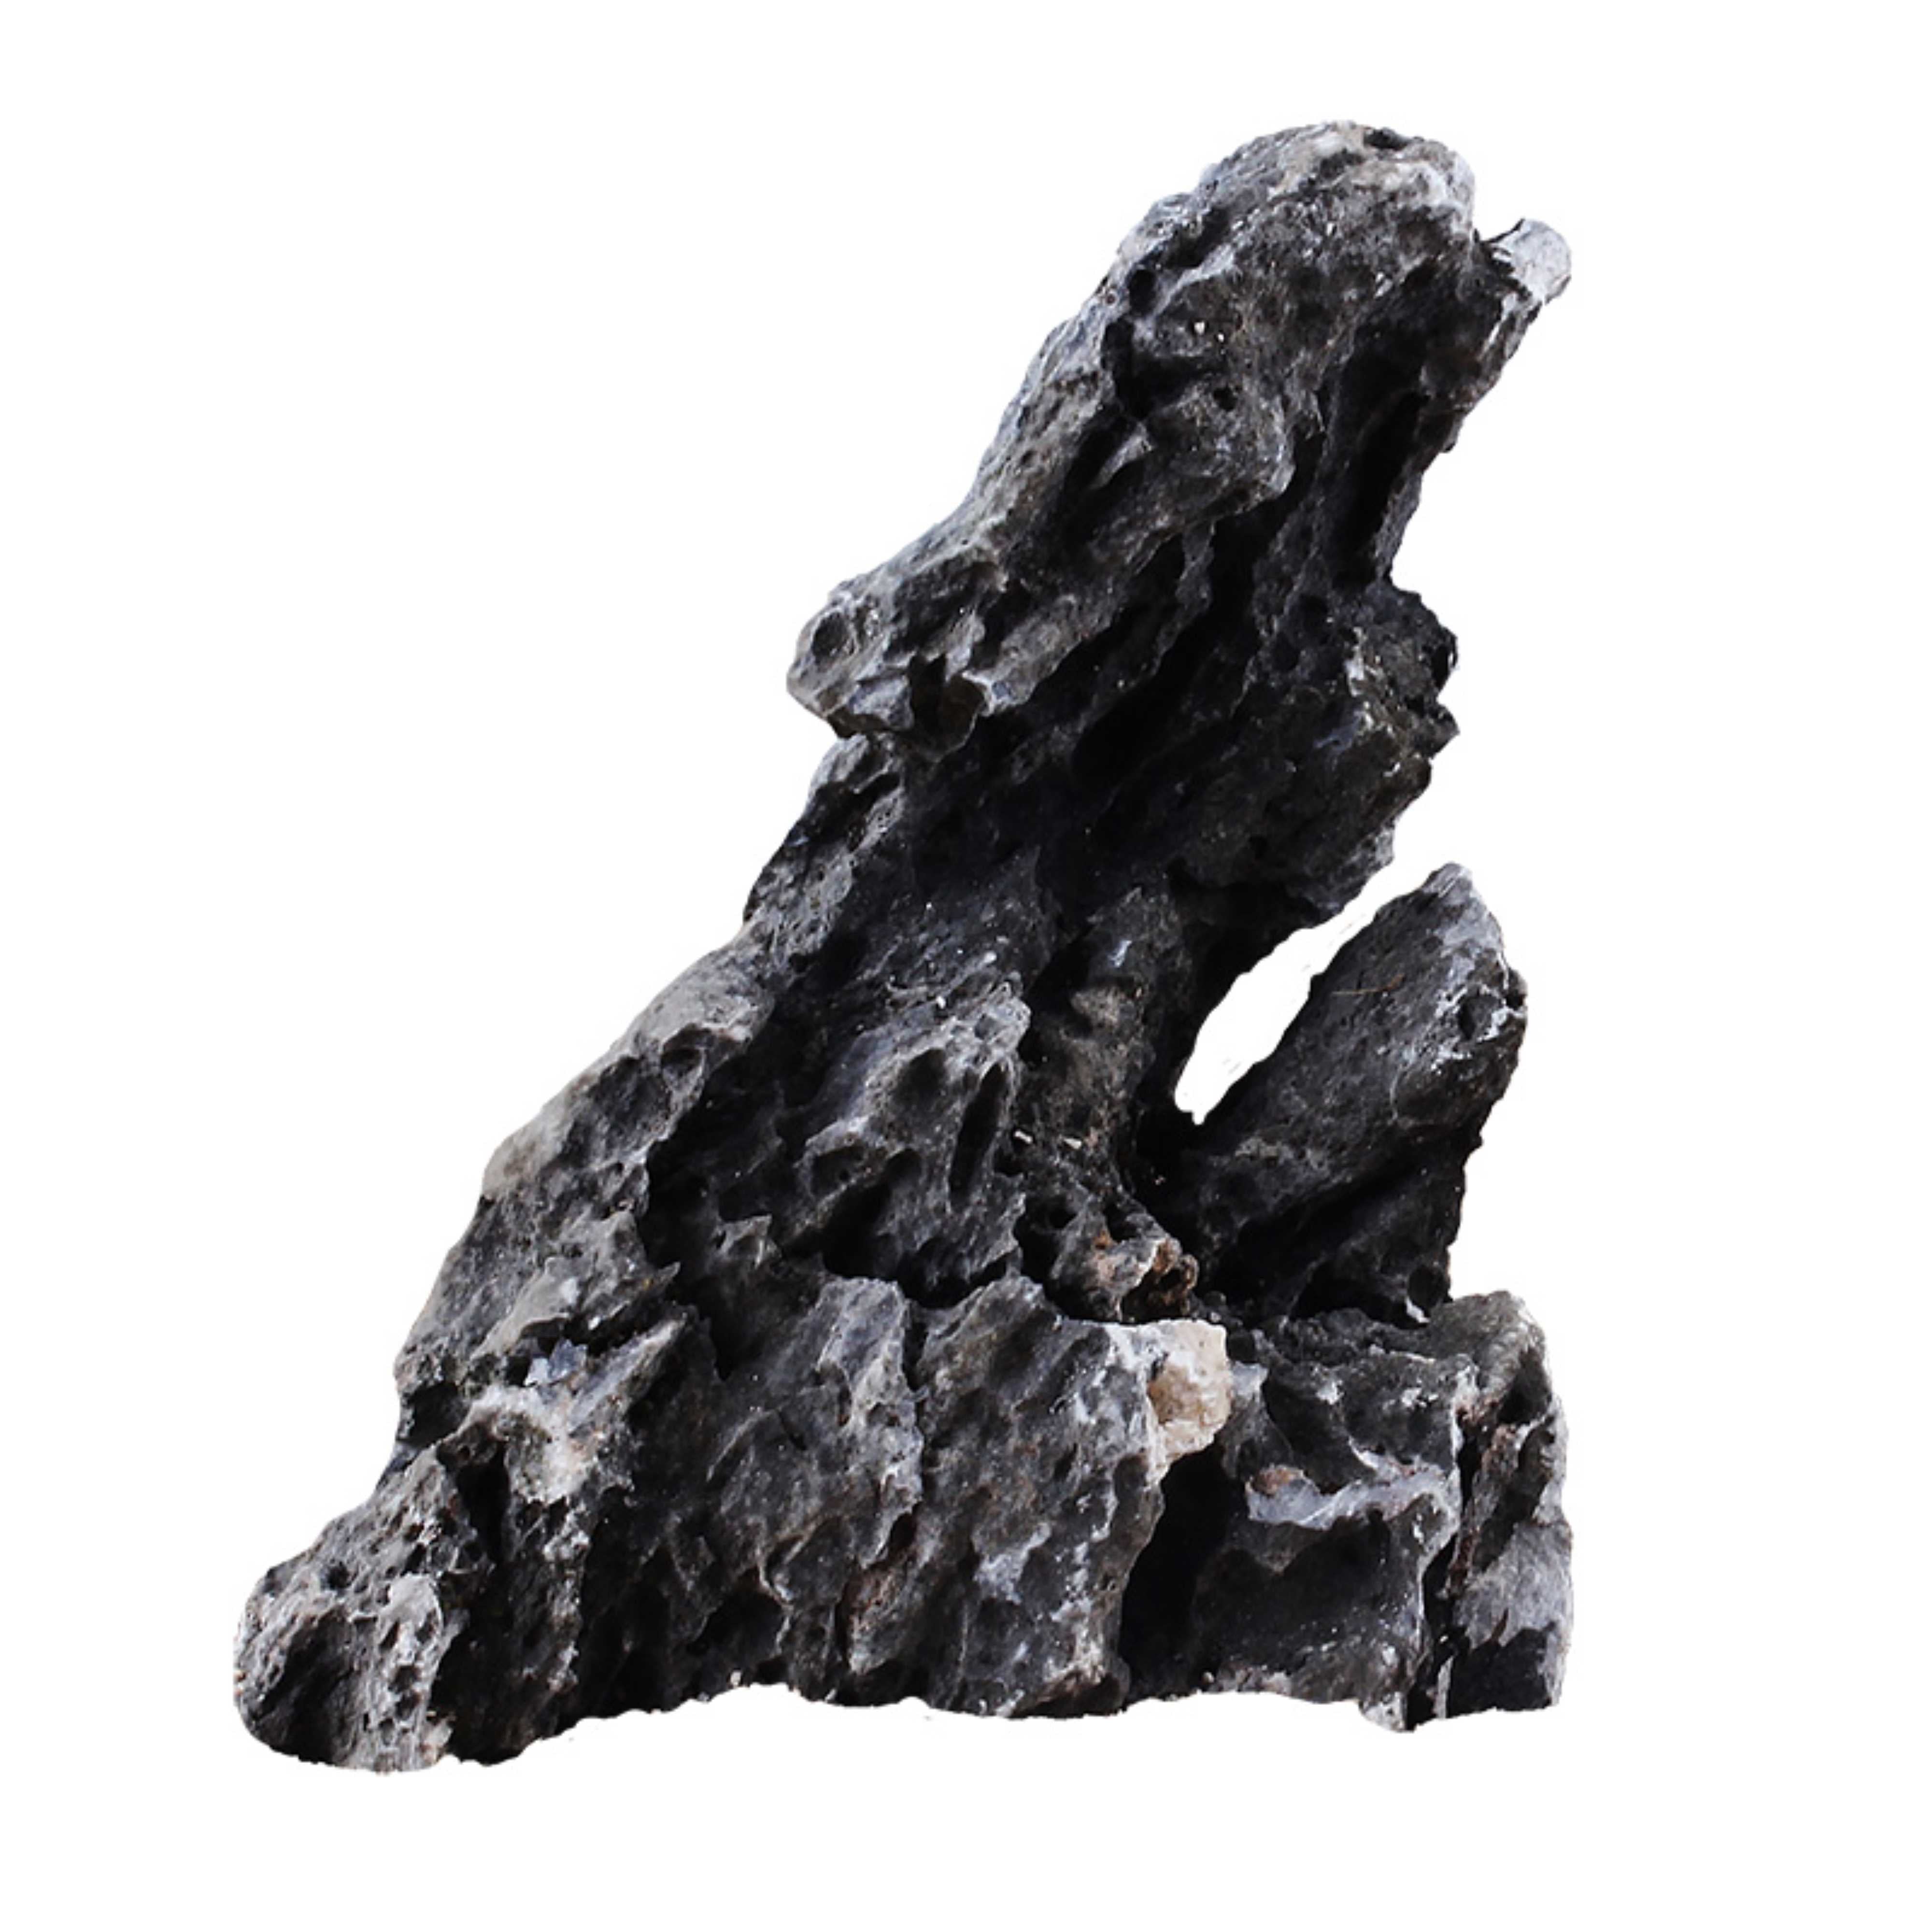  LANDEN Seiryu Stones Natural Rocks (17lbs, 3~11 inches,7-8pcs)  for Aquarium, Paludarium, Terrariums, Landscaping Rocks, Aquascaping : Pet  Supplies